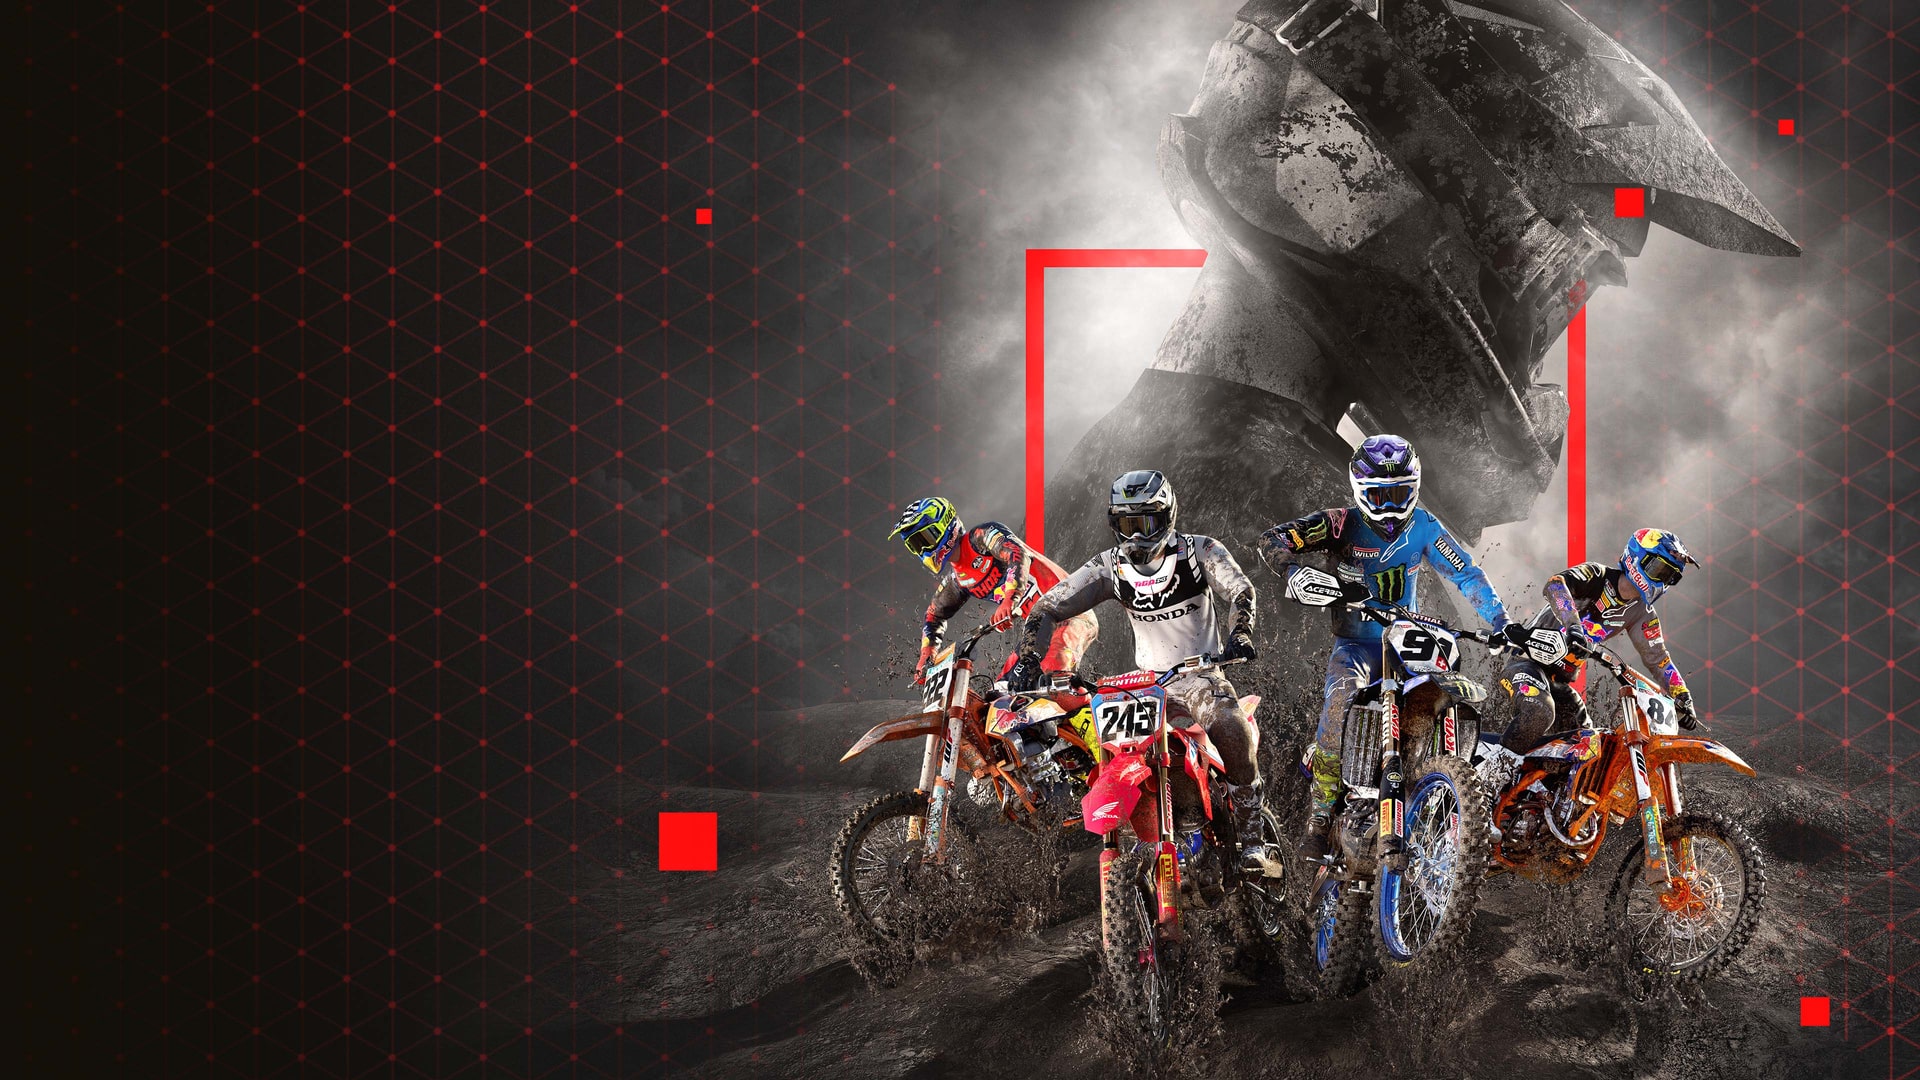 MXGP 2020 - The Official Motocross Videogame PS4 MÍDIA DIGITAL -  Raimundogamer midia digital